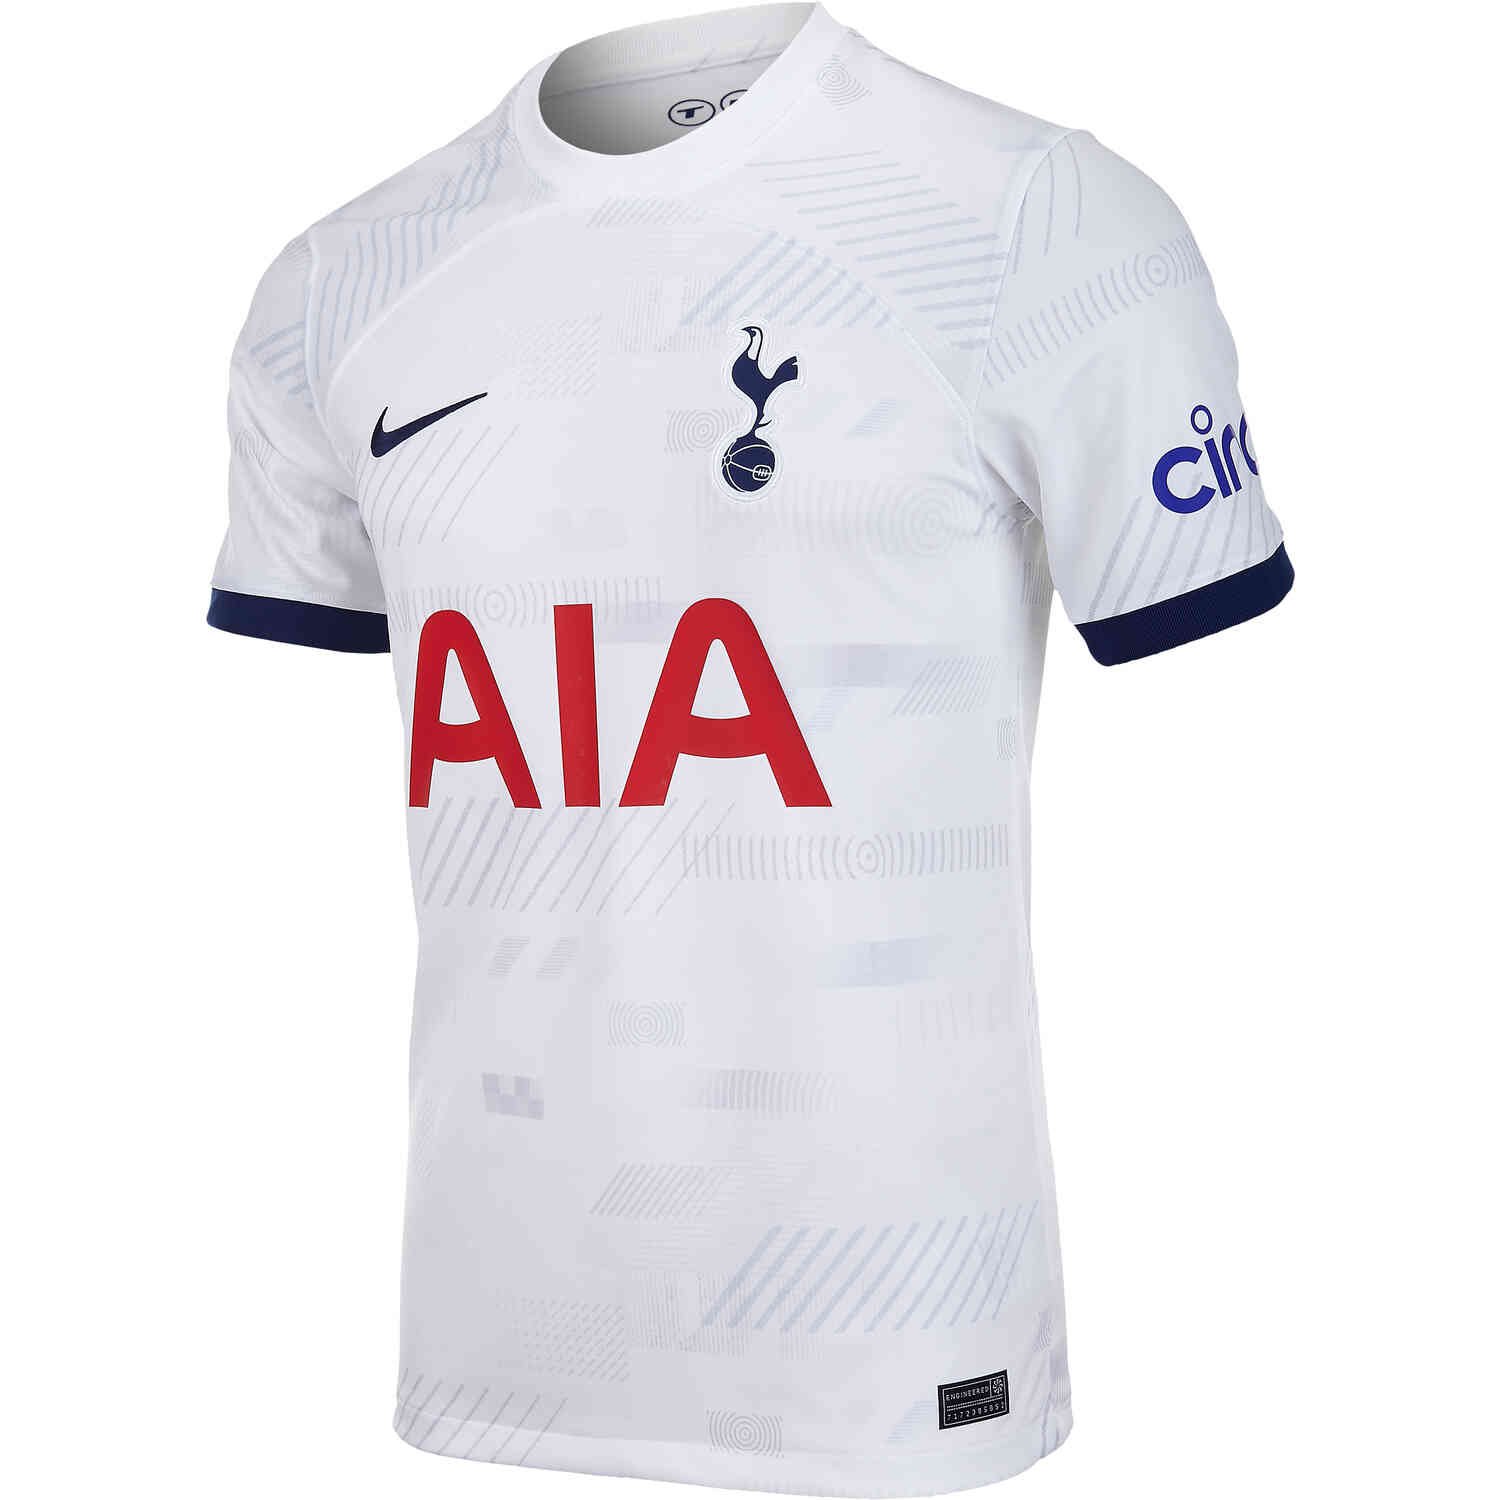 Tottenham Hotspur Away Kits - Historical Football Kits